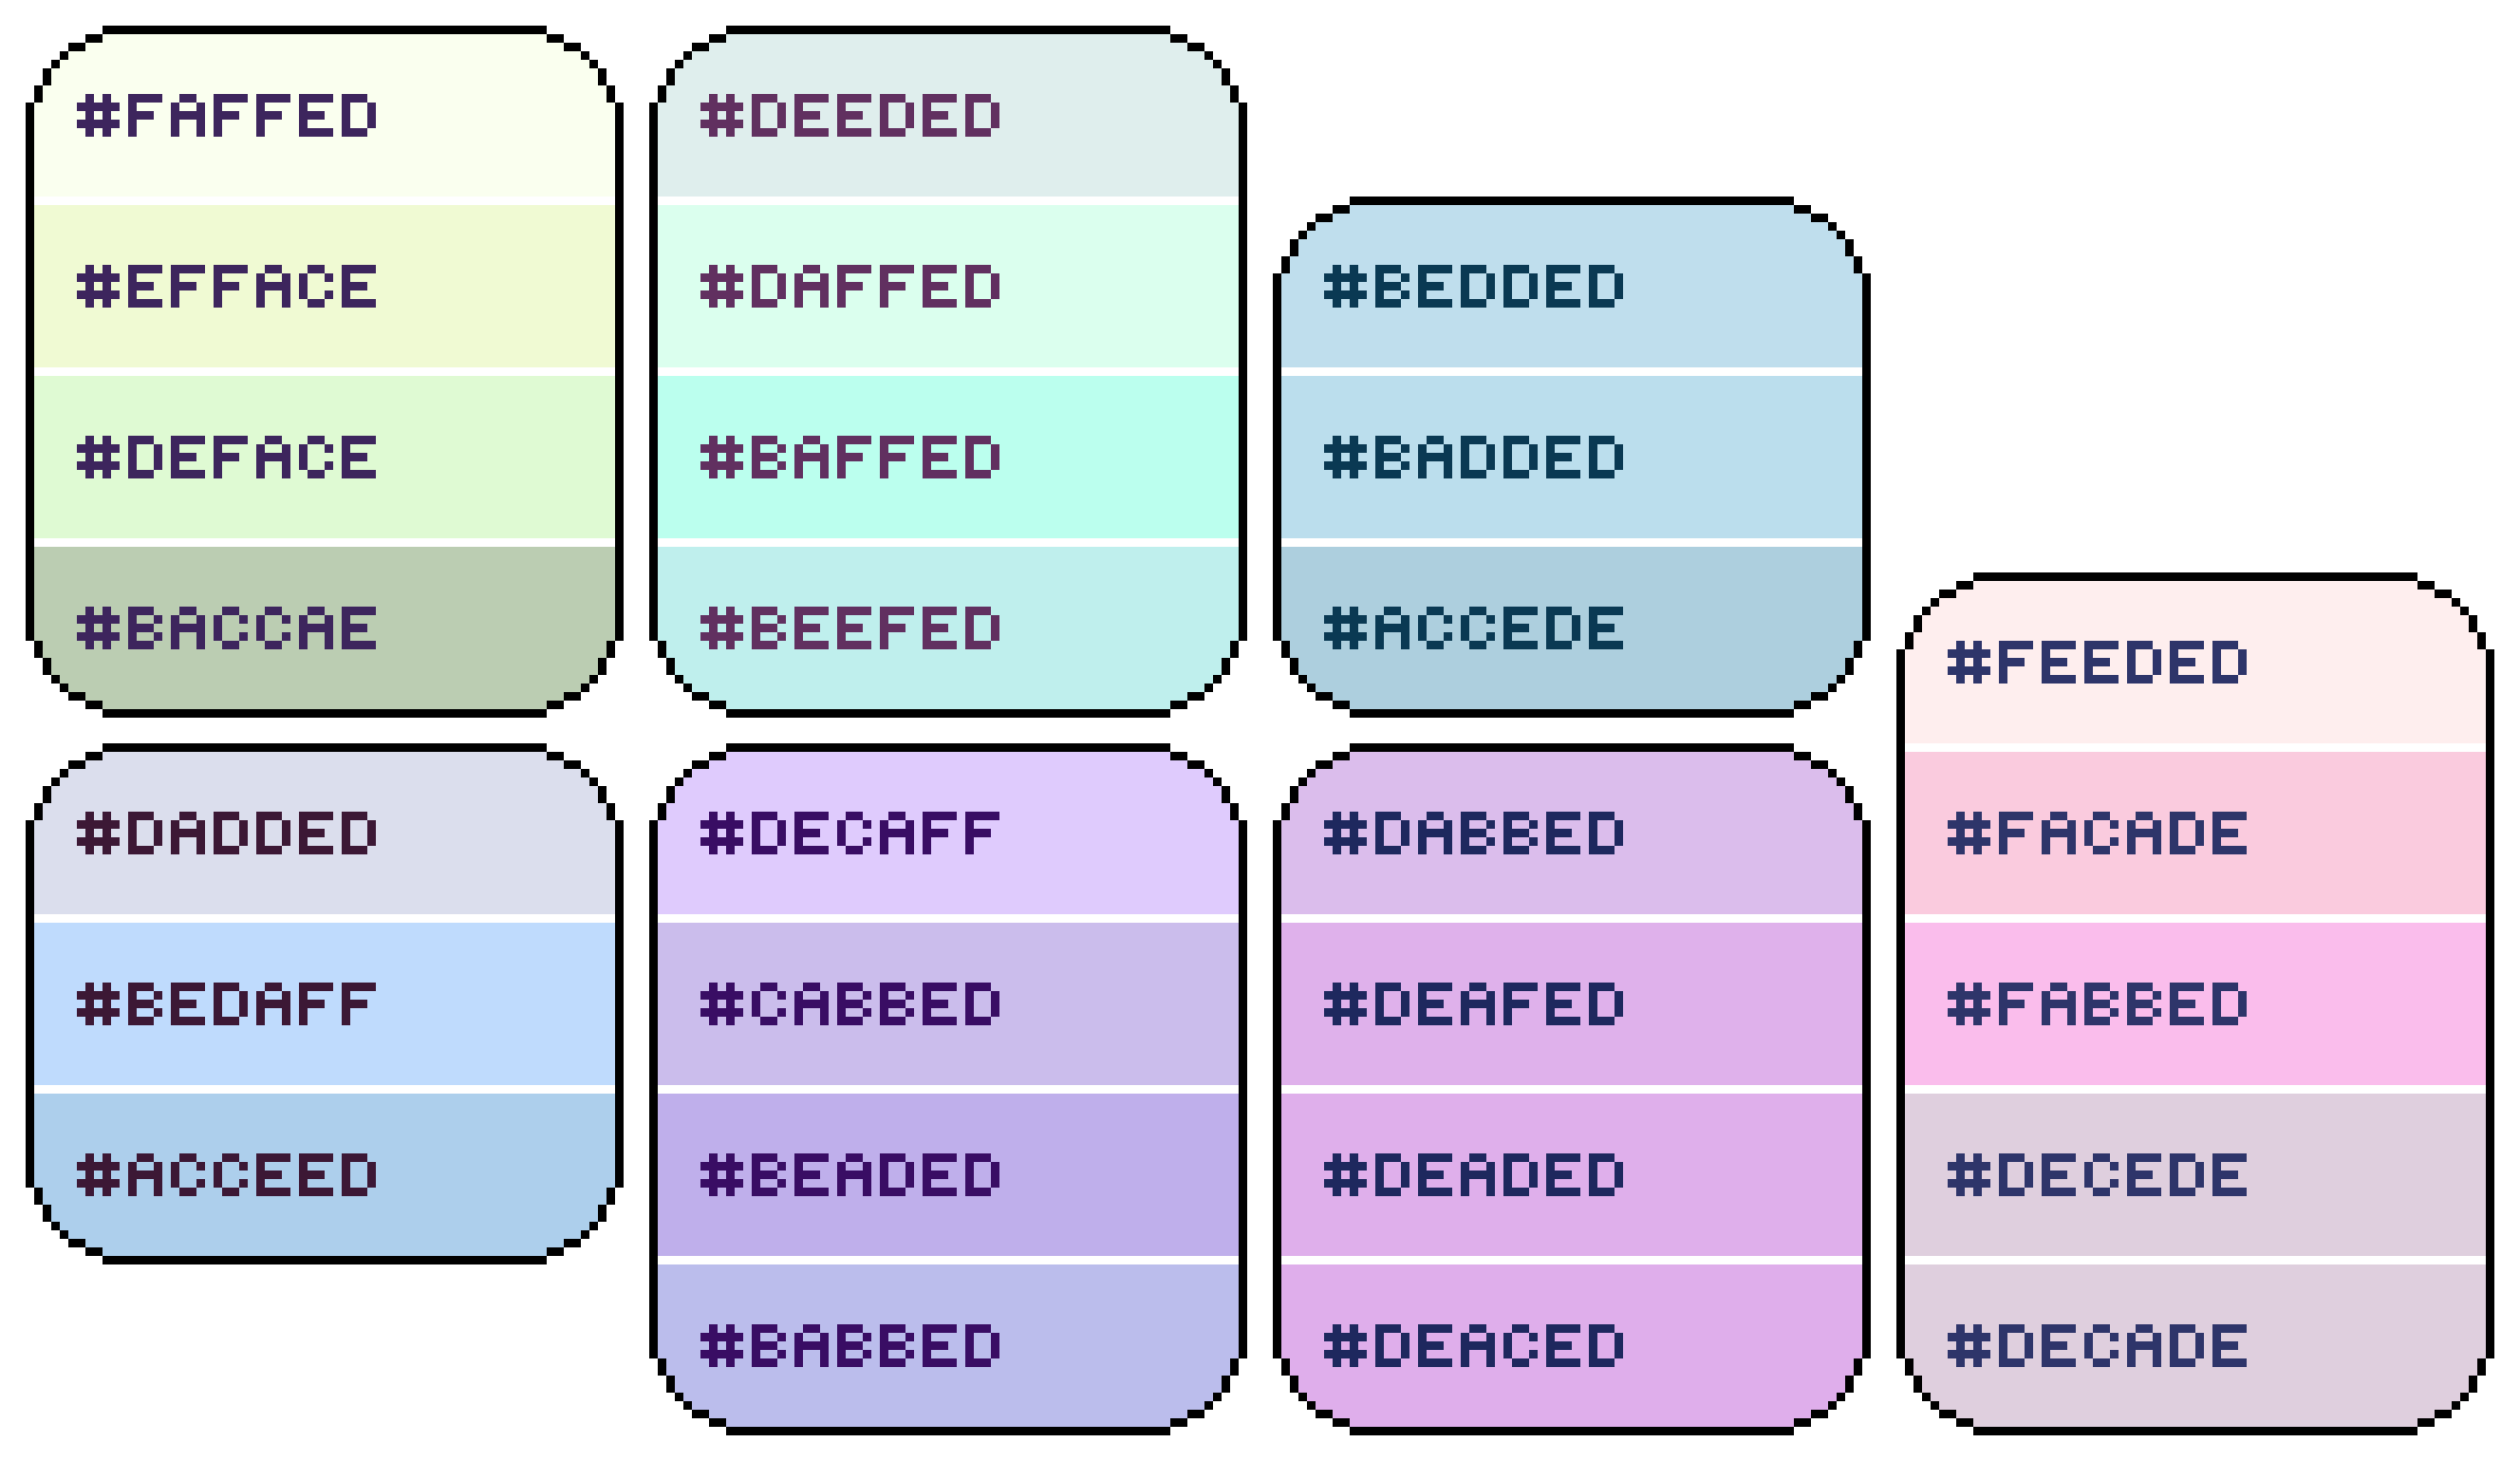 A pixel art representation of the seven preceding paint chips